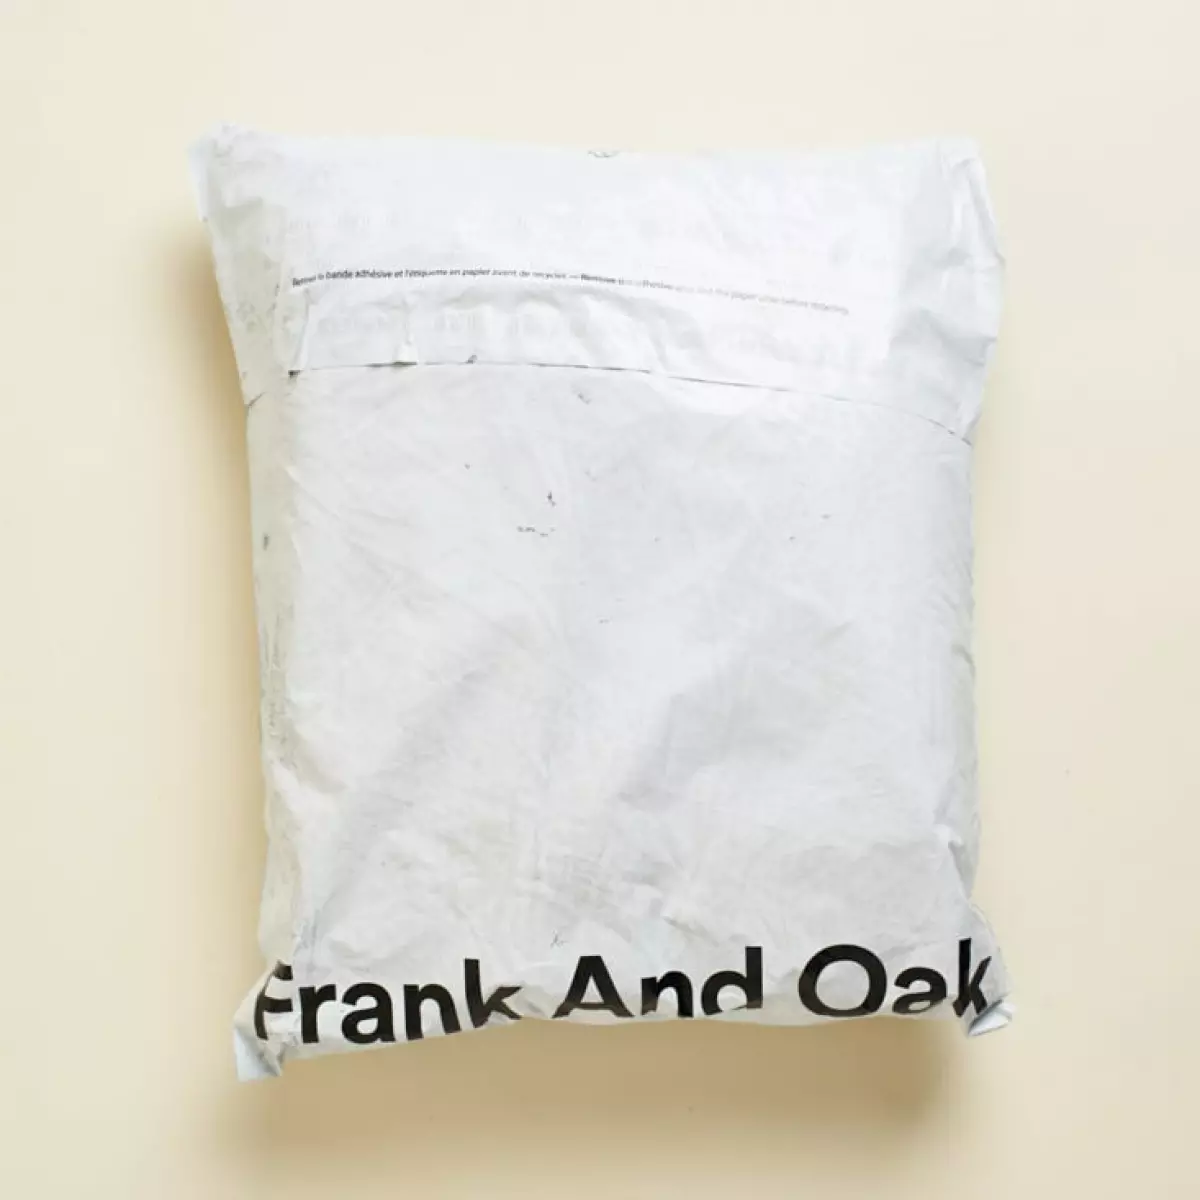 Frank and Oak February 2021 packaging